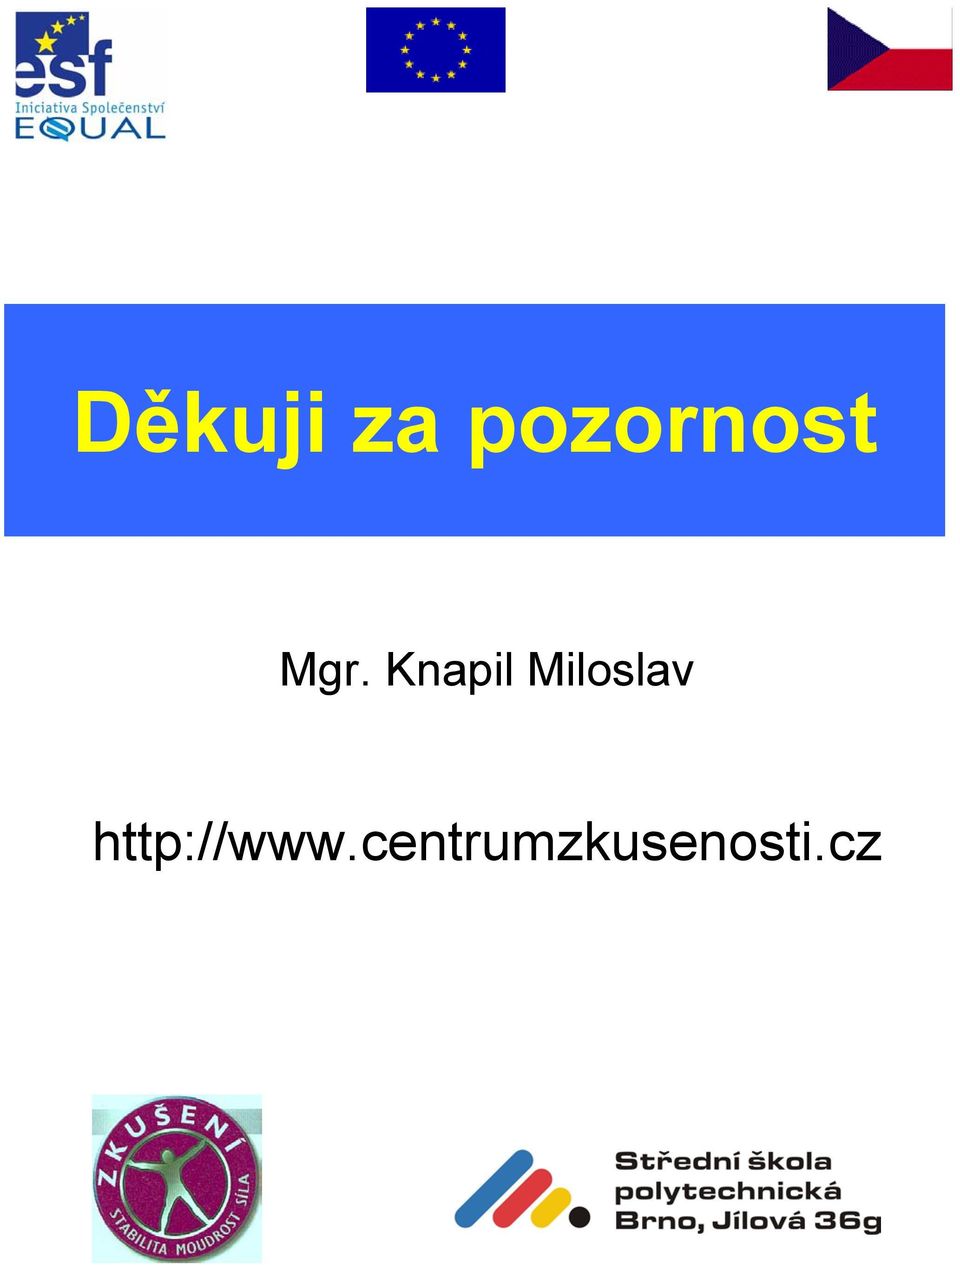 Knapil Miloslav